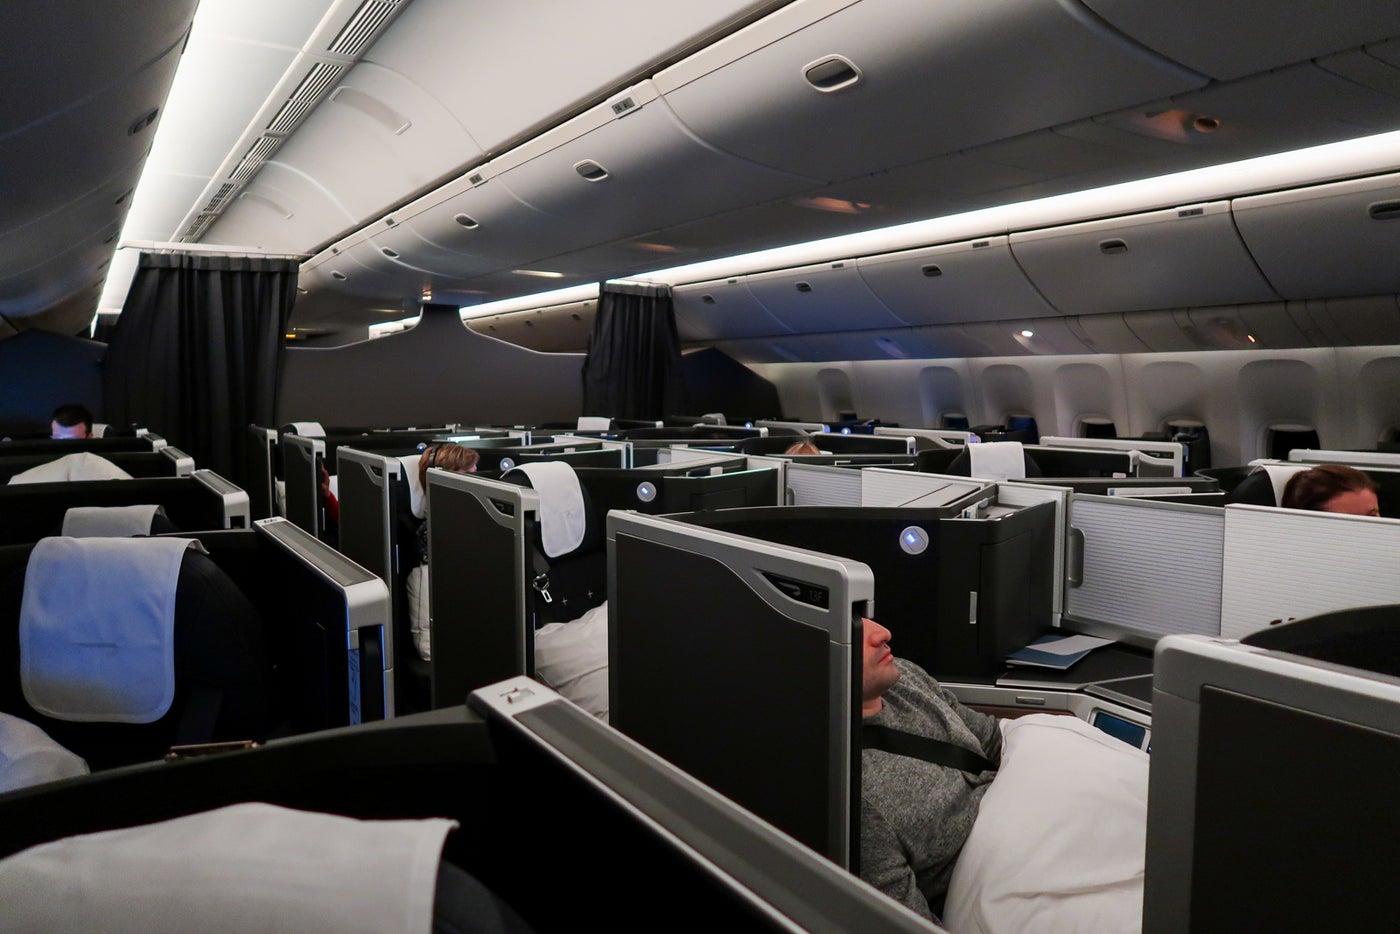 Review: British Airways Club Suite on the refurbished 777